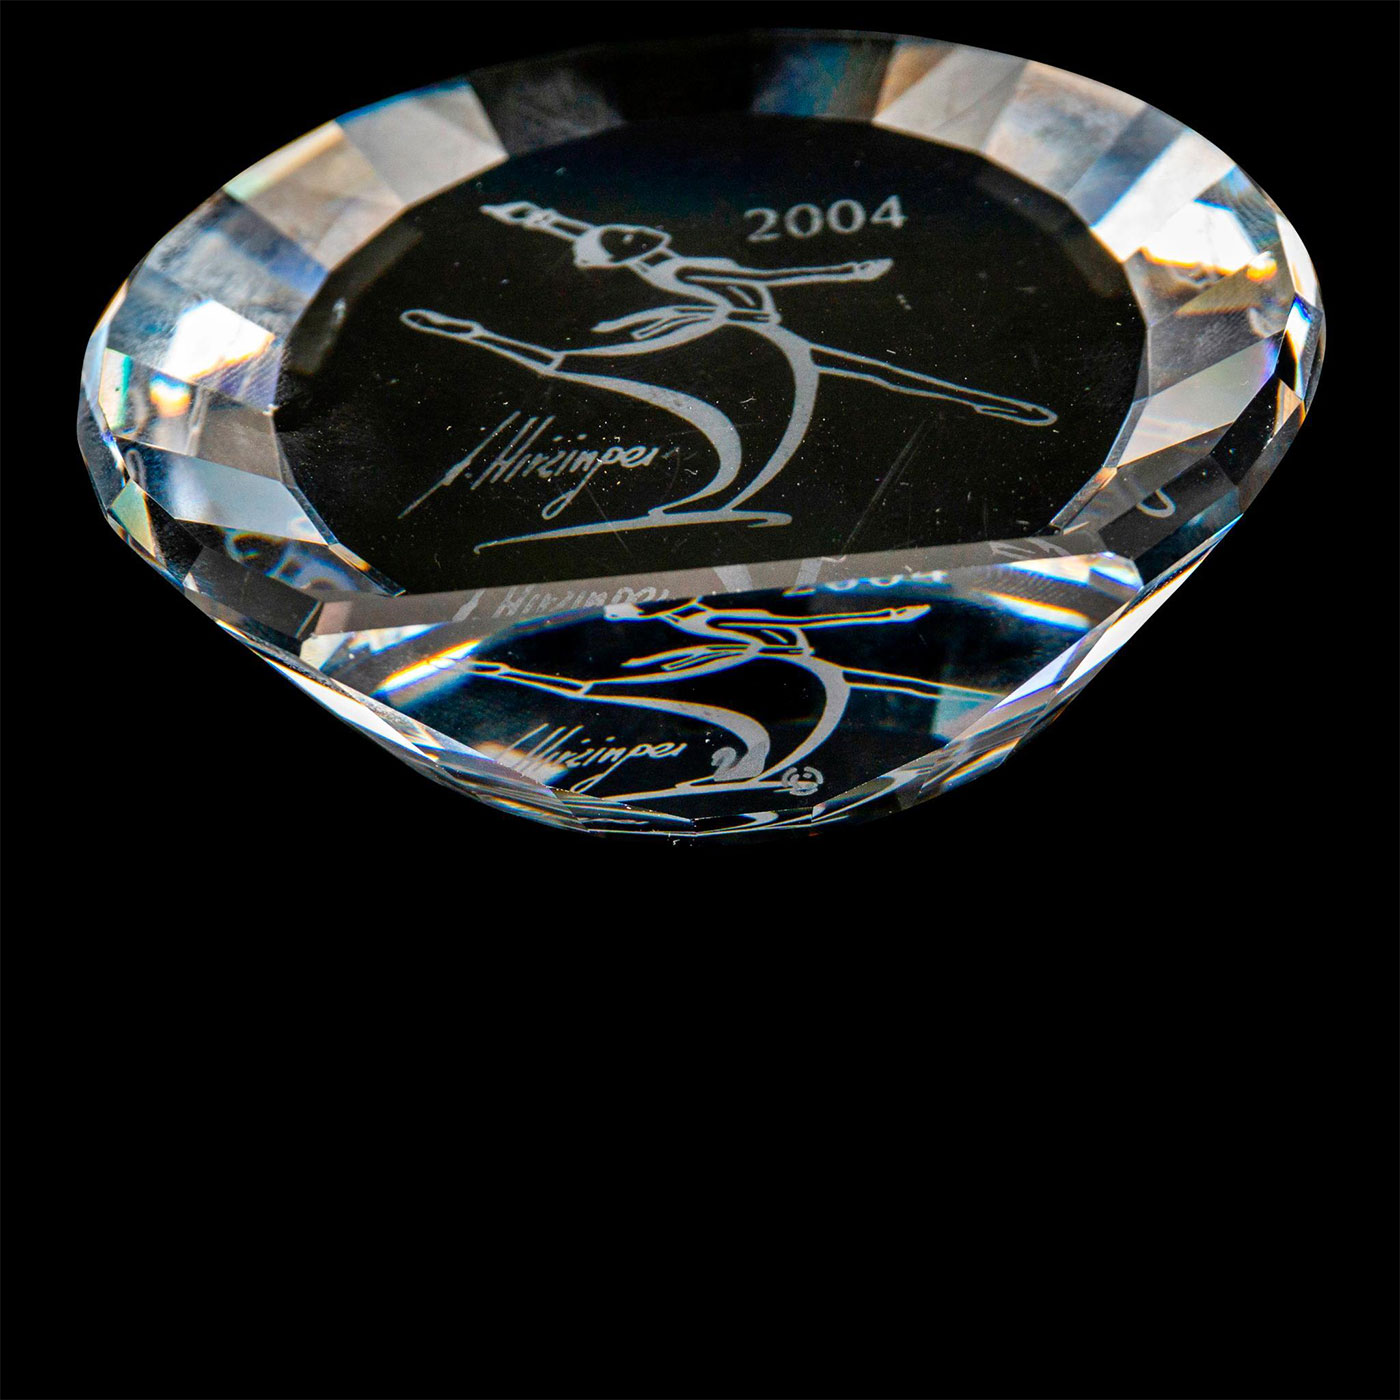 Swarovski Crystal Display Plaque, 2004 Magic of the Dance - Image 3 of 3